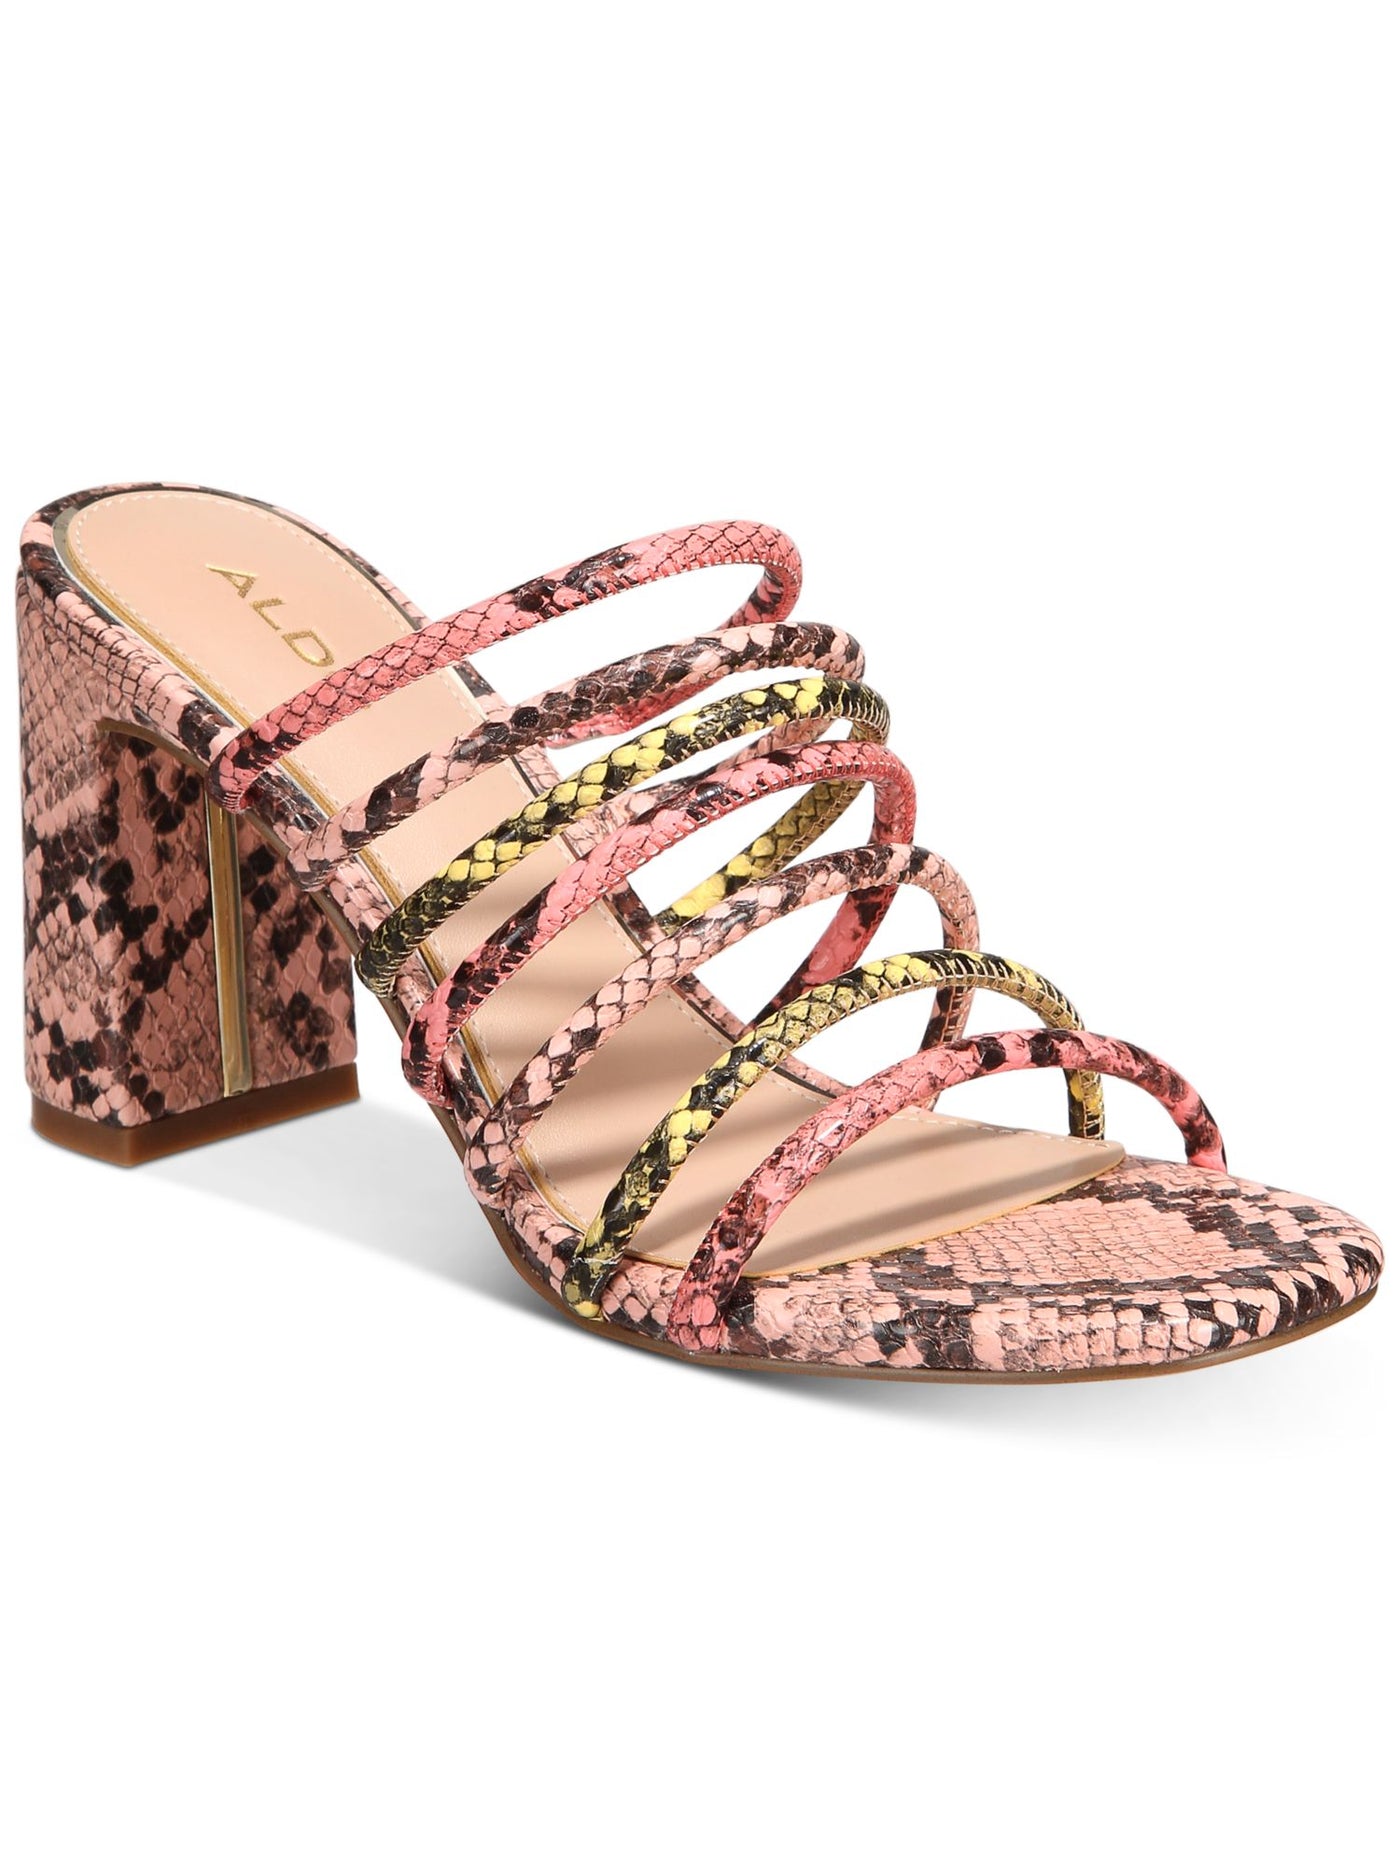 ALDO Womens Pink Snake Print Strappy Trelidda Square Toe Slip On Sandals Shoes 6